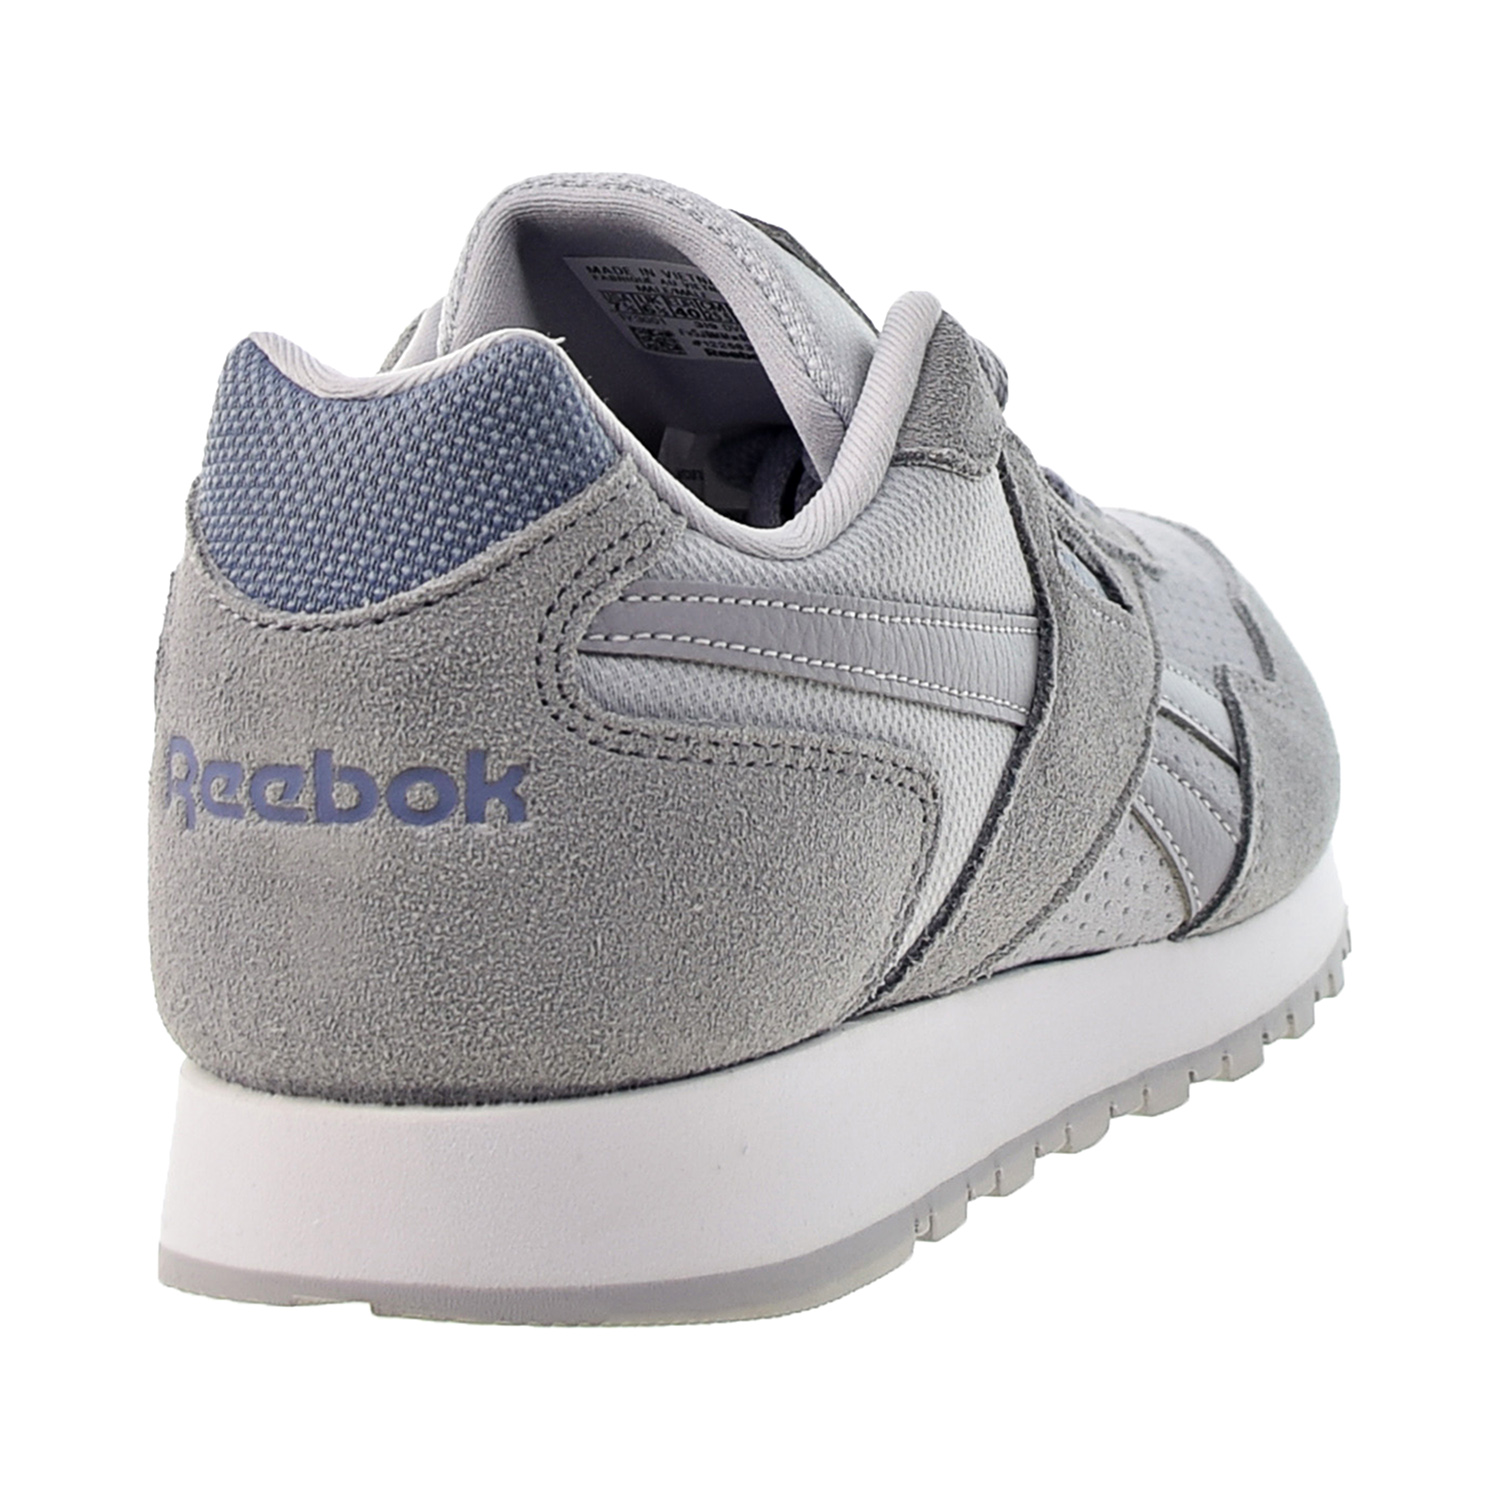 Reebok Classic Harman Run LT Men's Shoes US Cool Shadow-Grey-White dv8130 (7 M US)